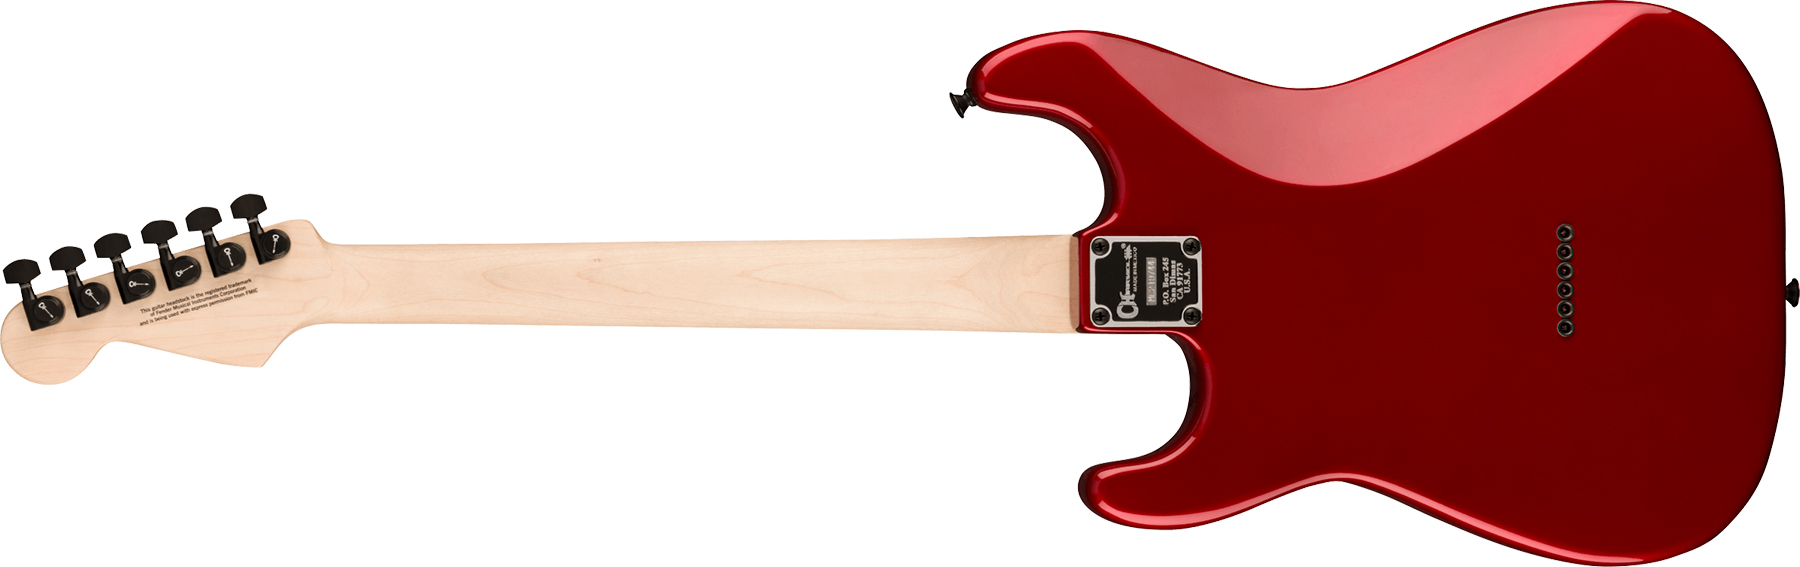 Charvel So-cal Style 1 Hh Ht E Pro-mod 2h Seymour Duncan Eb - Candy Apple Red - Guitare Électrique Forme Str - Variation 1